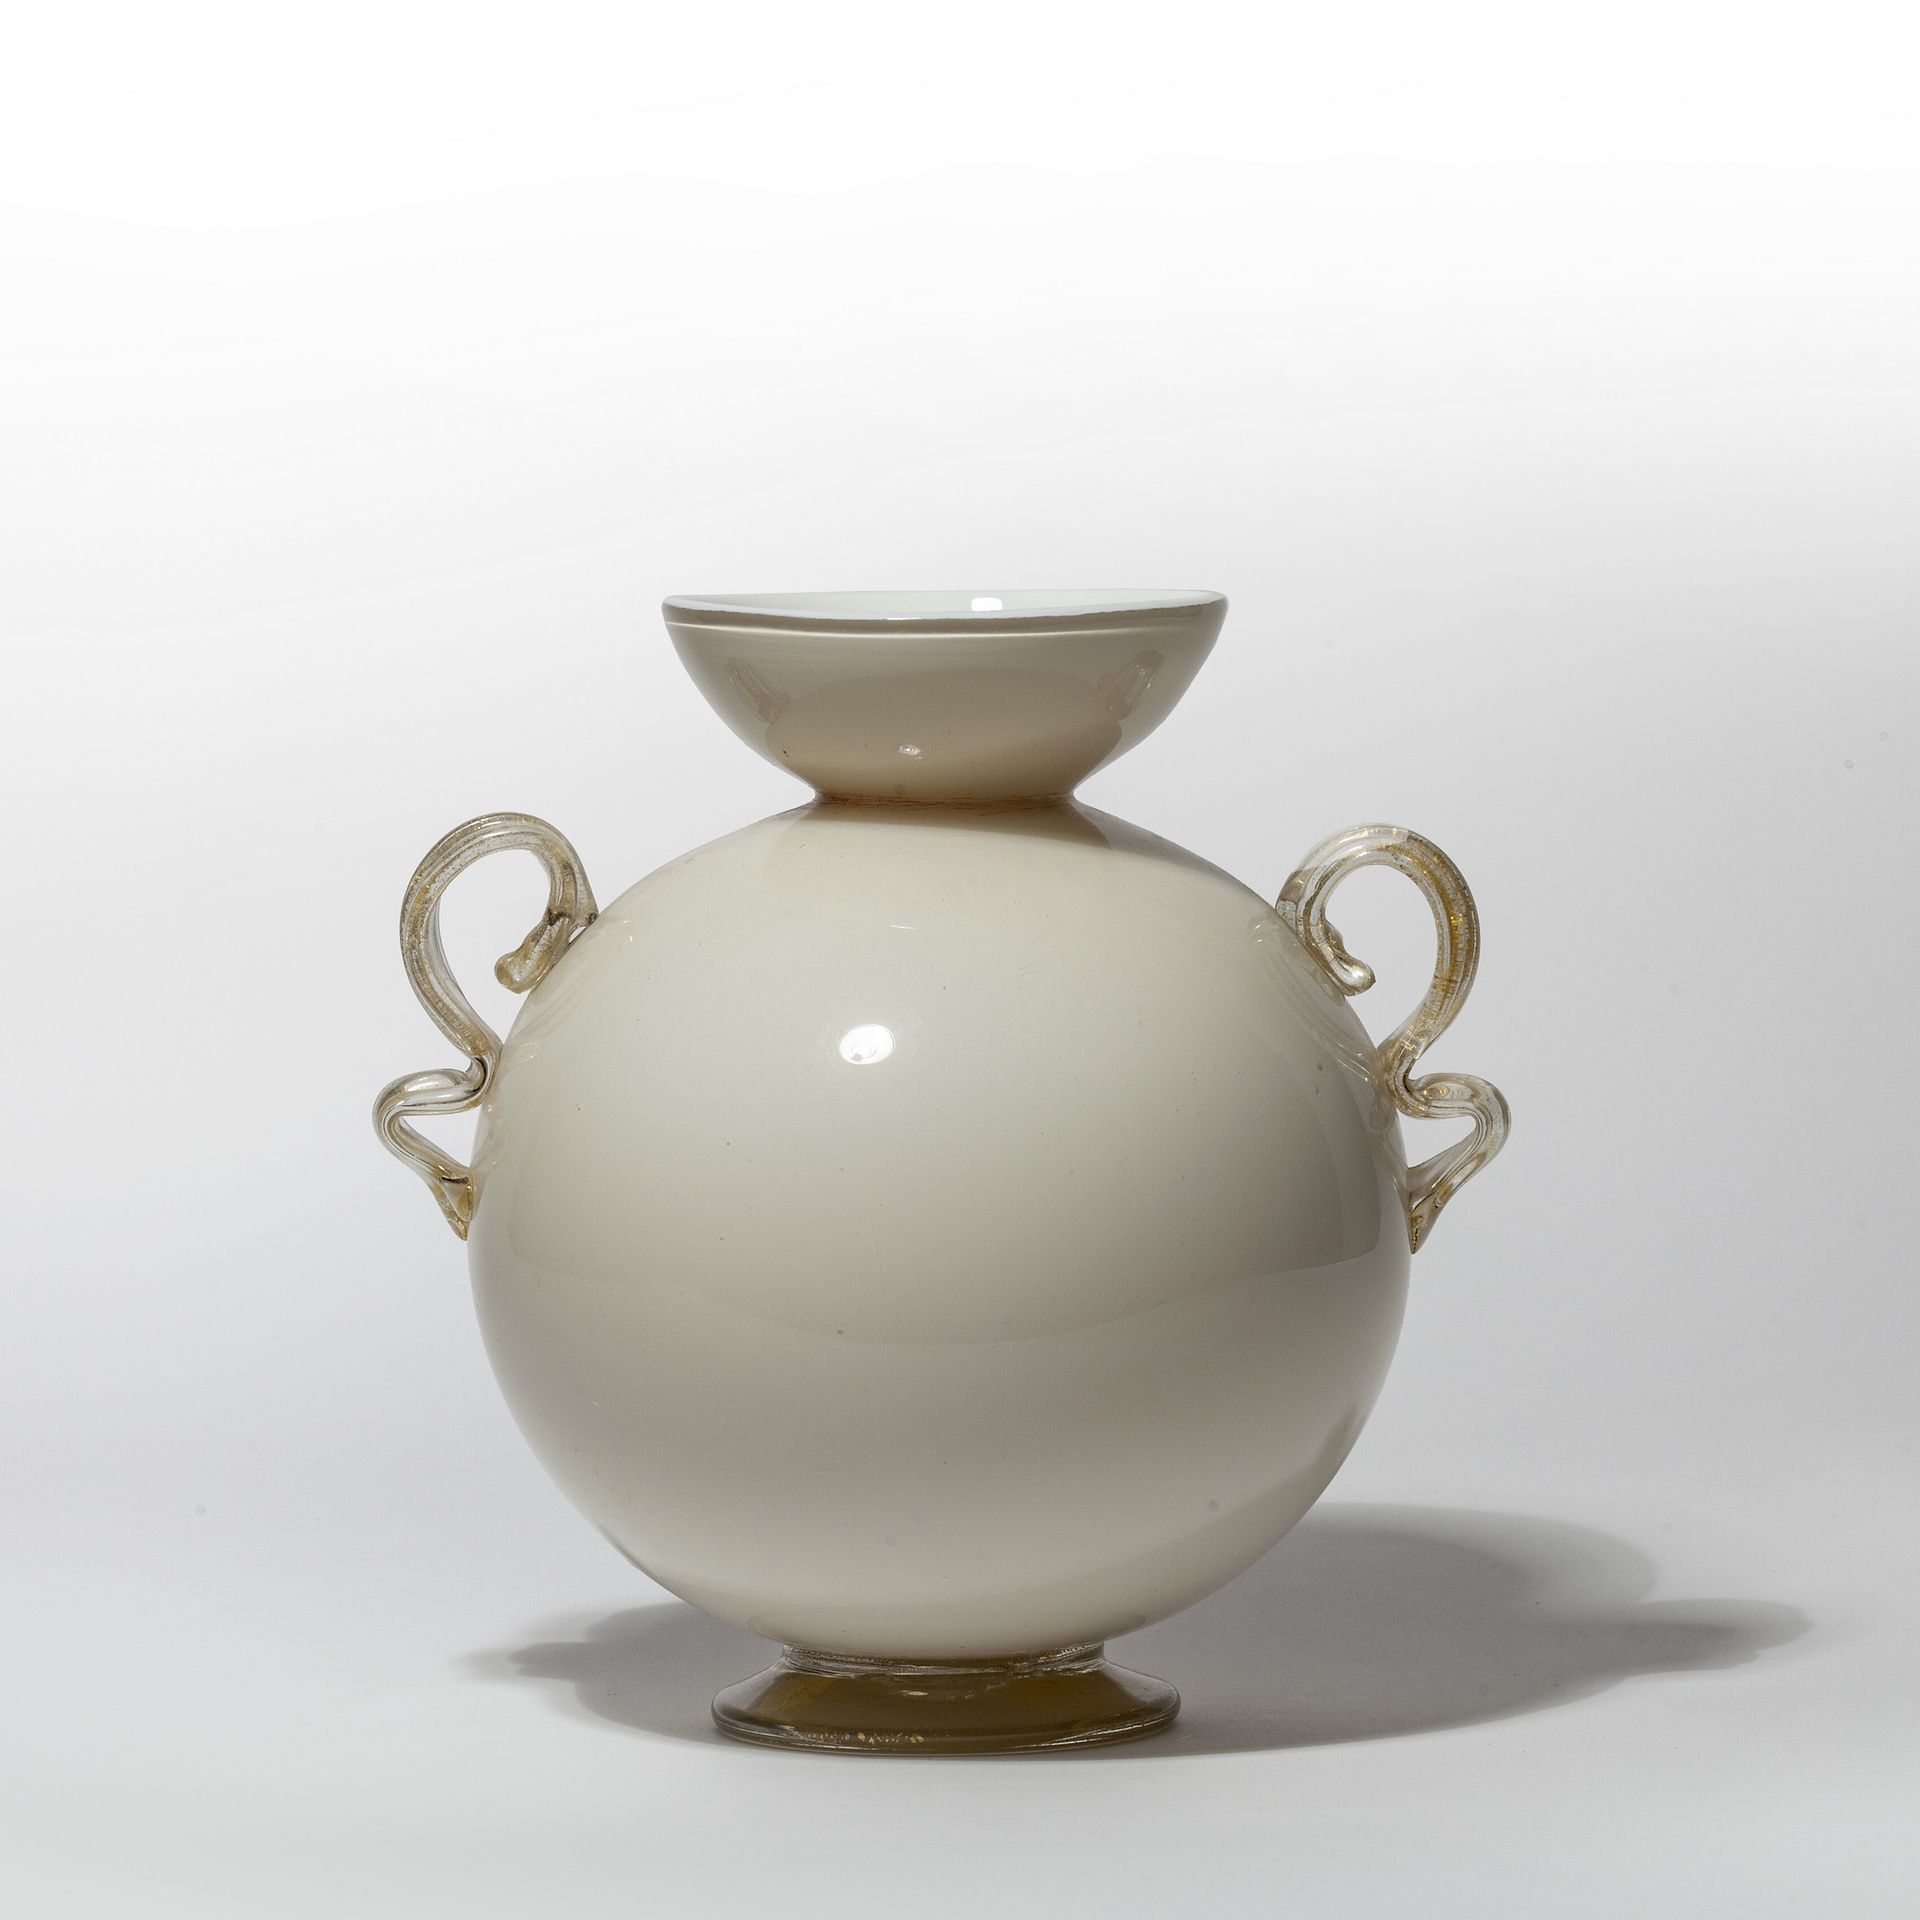 MARTINUZZI NAPOLEONE NAPOLEON MARTINUZZI ZECCHIN
A beige lacquered glass vase wi&hellip;